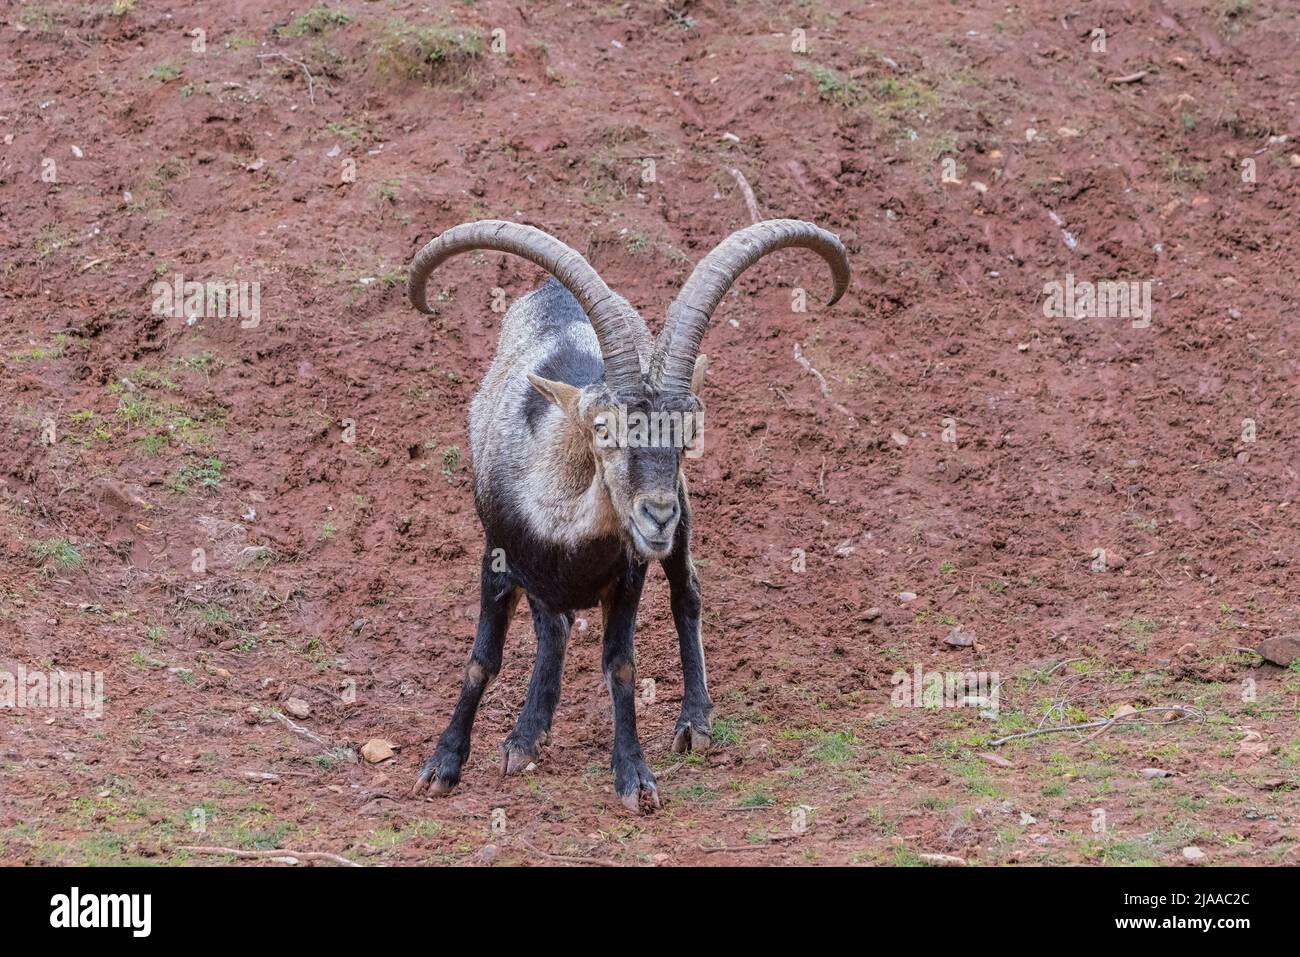 Iberian Ibex (Capra pyrenaica), also known as the Cabra Hispanica, Cabra Montes, Spanish ibex, Spanish wild goat, or Iberian wild goat.  Photographed Stock Photo